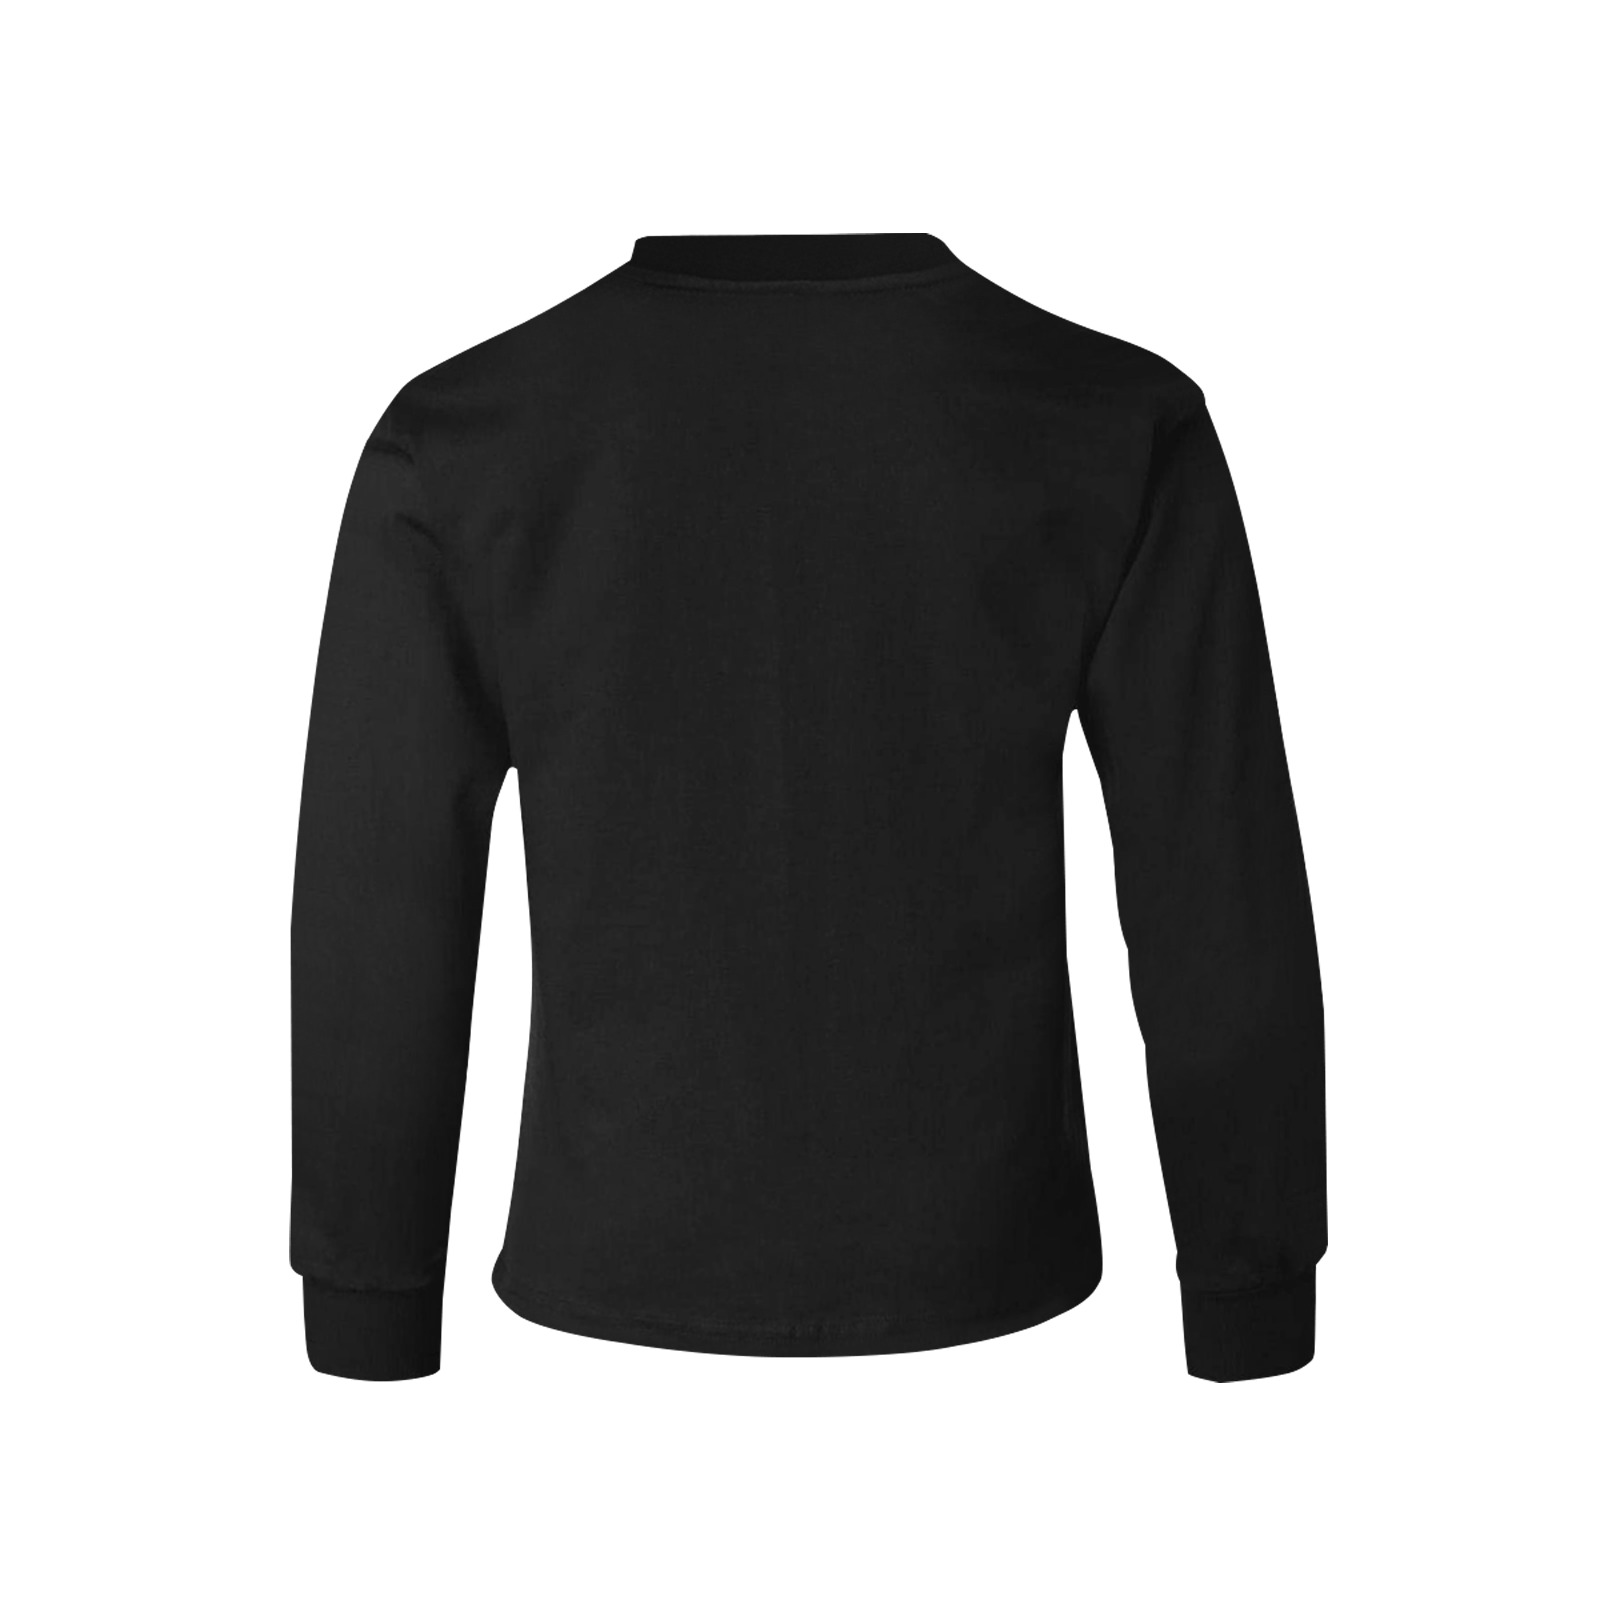 Abstract Elephant Kid's Sweatshirt Kids' Rib Cuff Long Sleeve T-shirt (Model T64)